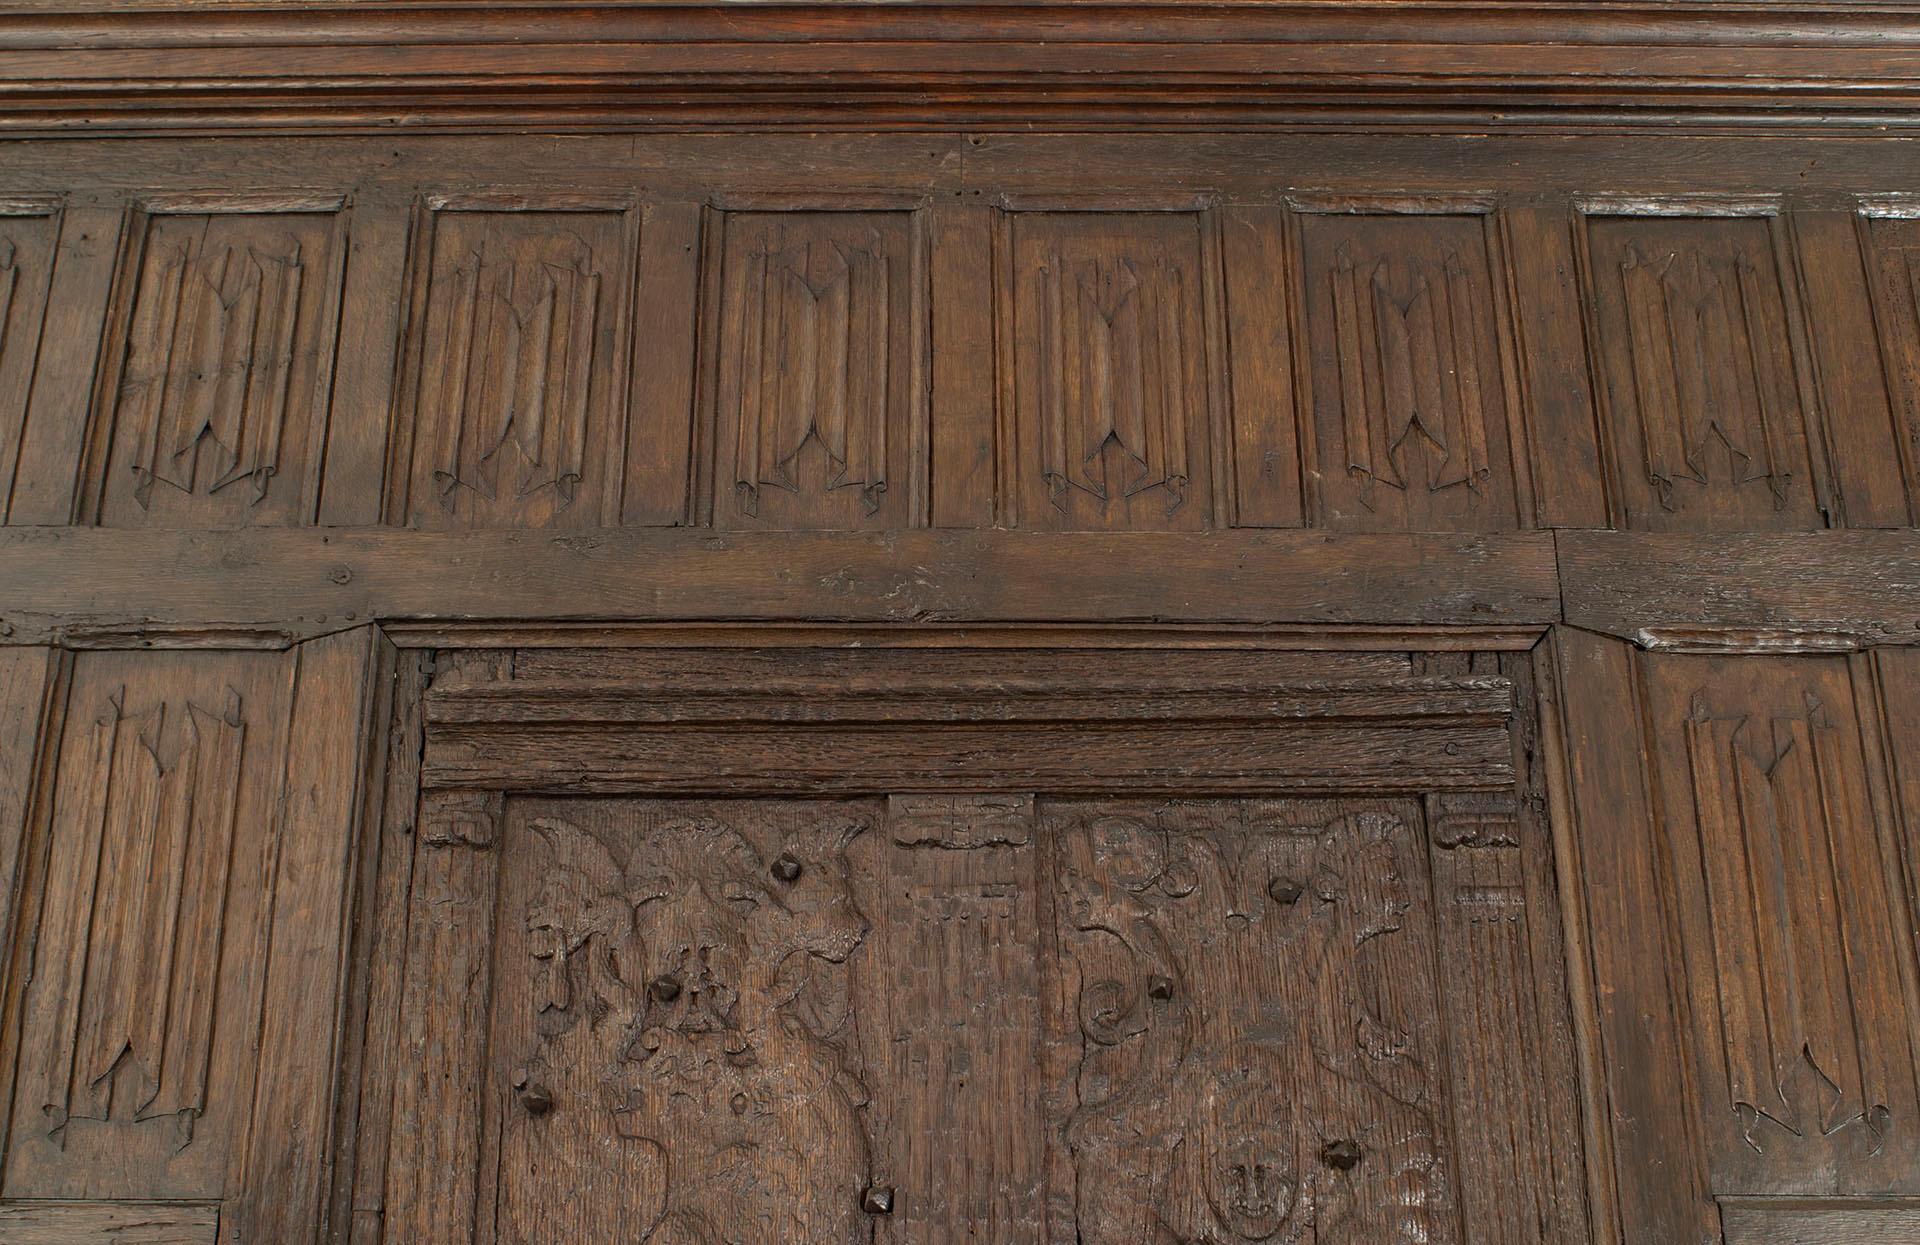 Gothic English Renaissance Carved Oak Paneled Room For Sale